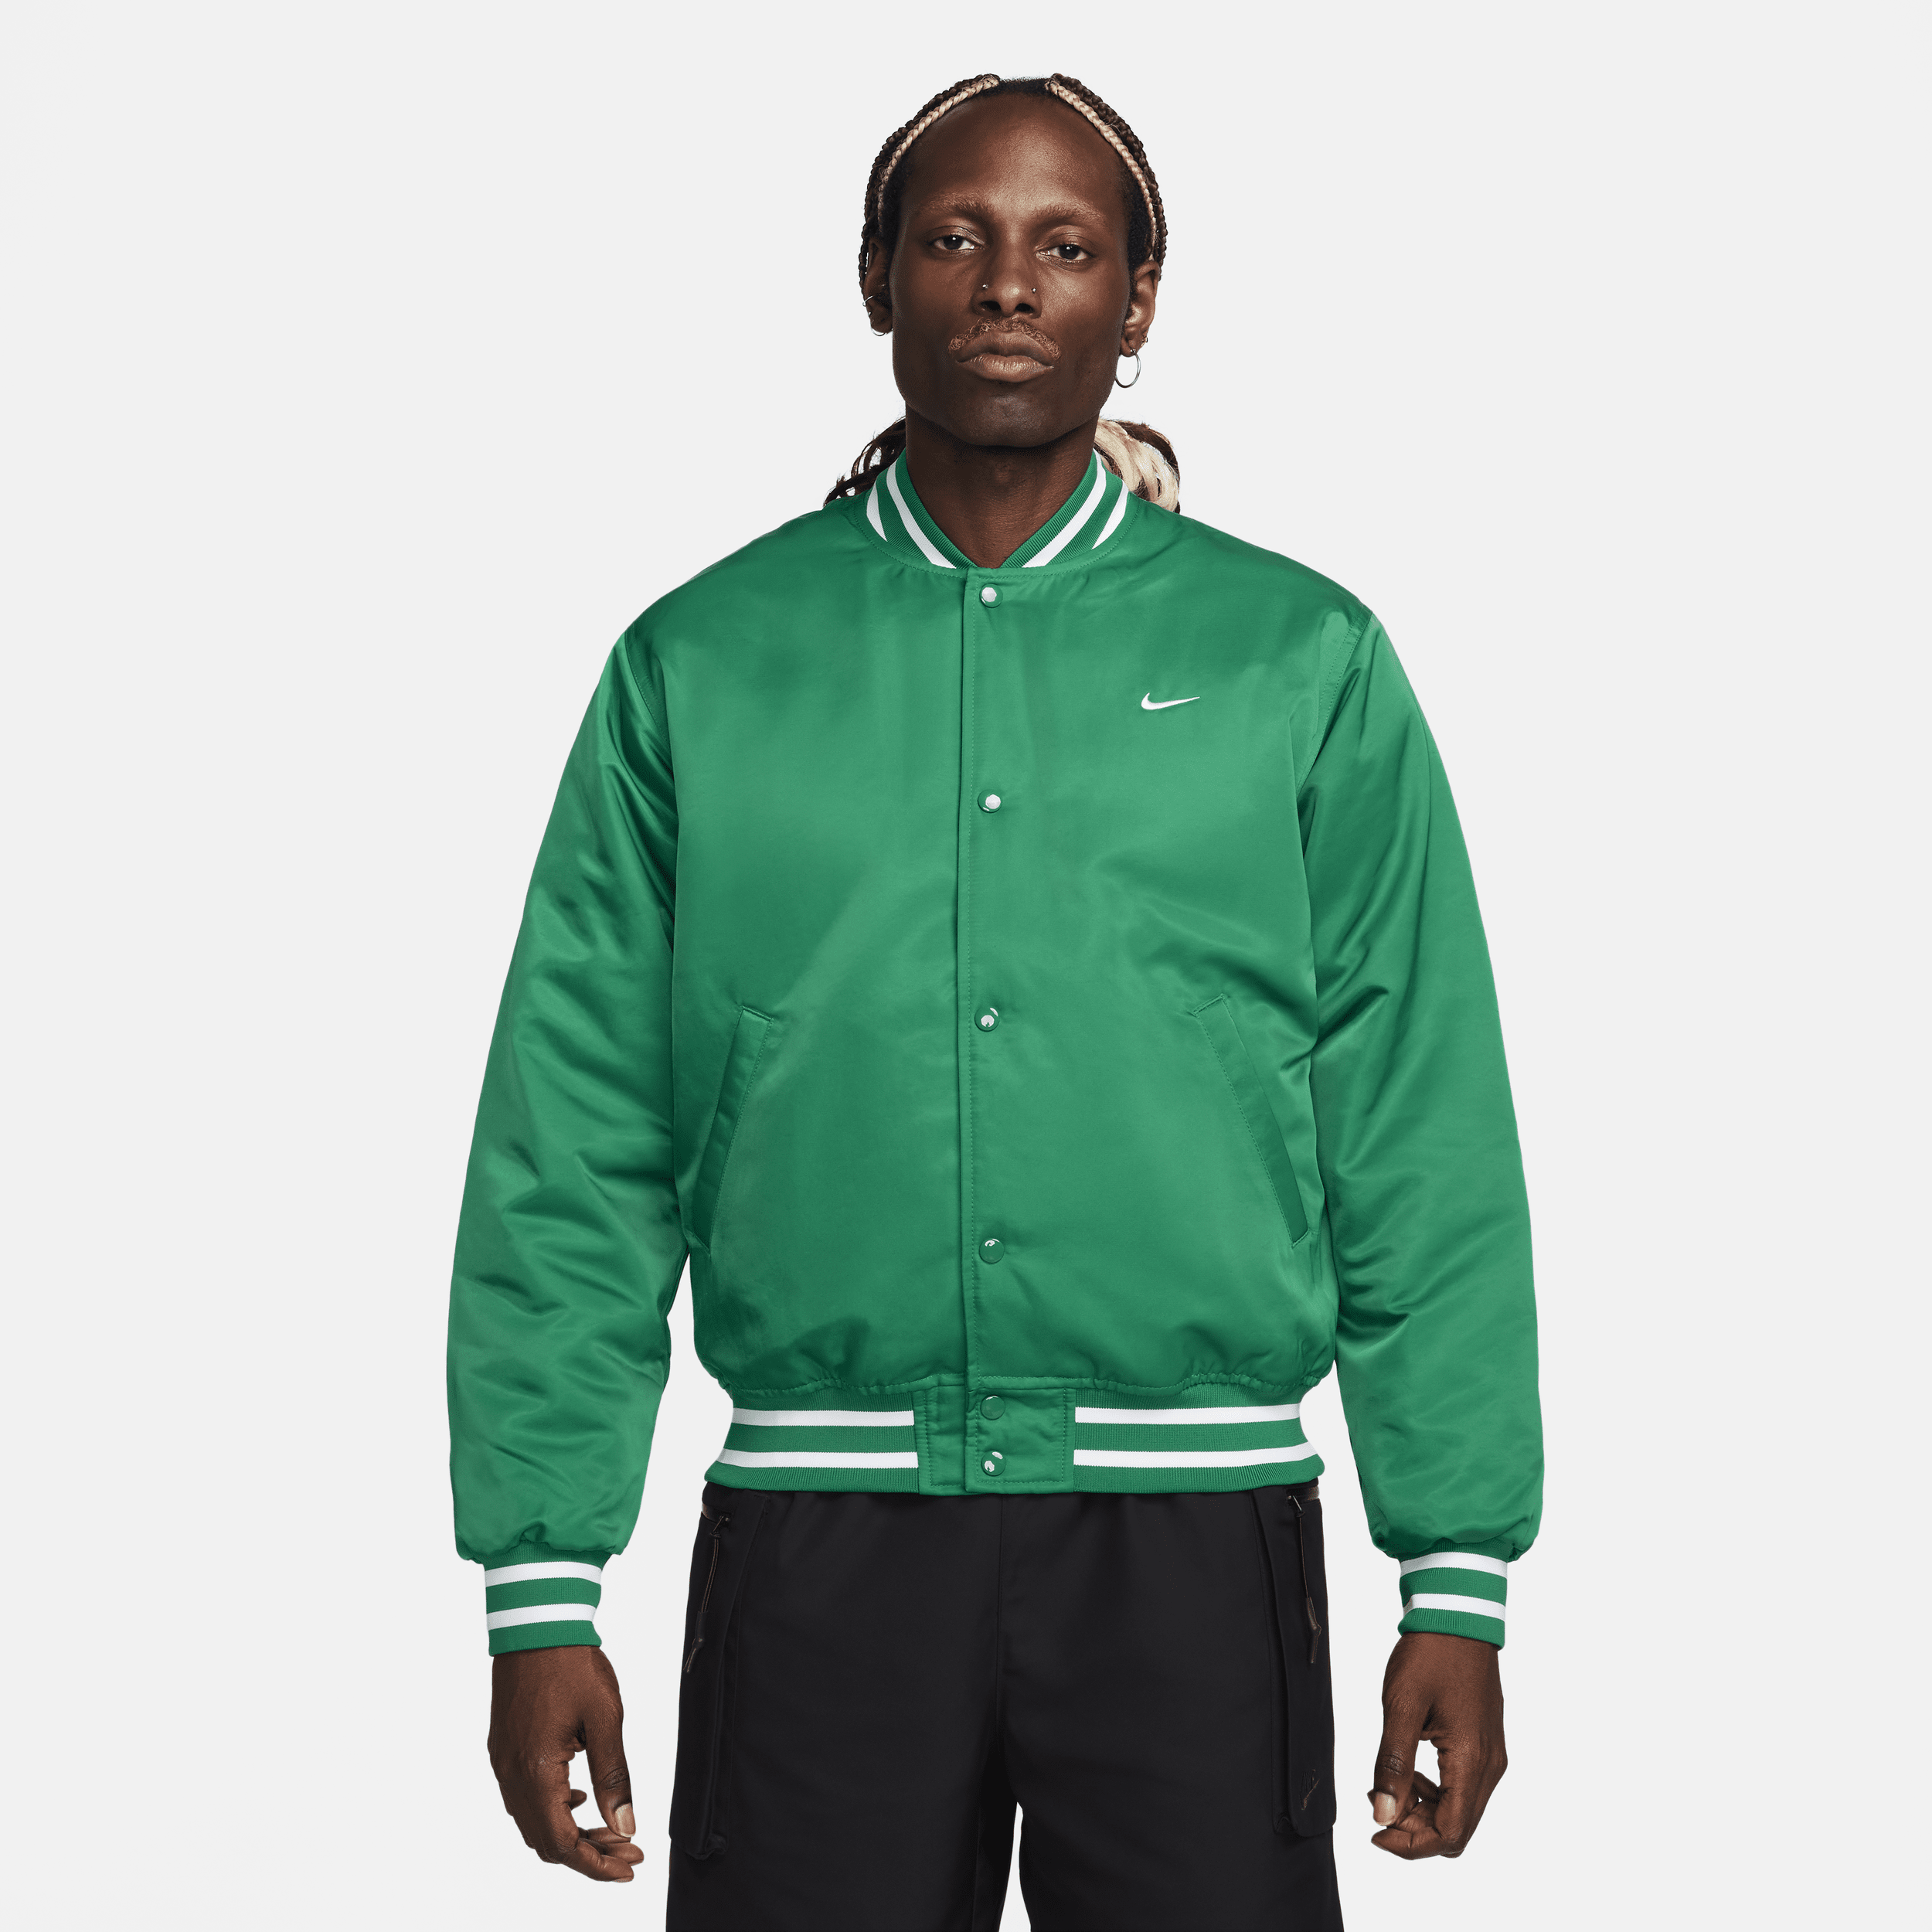 Nike Authentics Chaqueta Dugout - Hombre - Verde